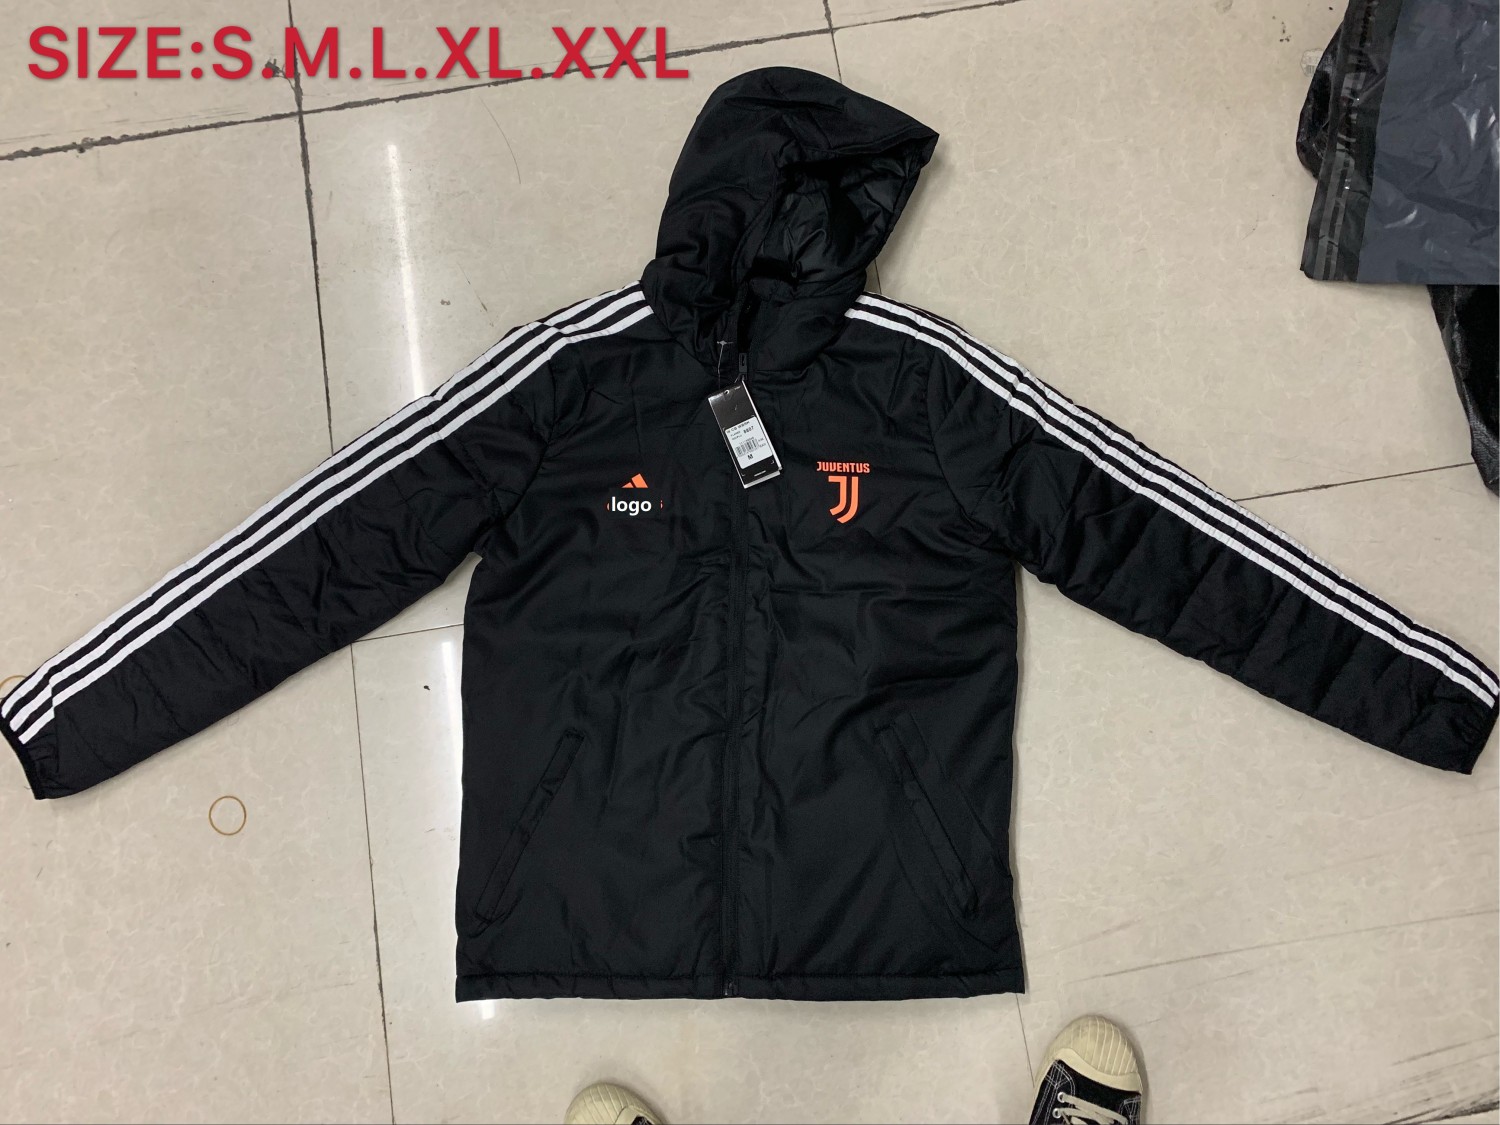 2019/20 Adult Juventus black jacket men cotton padded clothes soccer coat